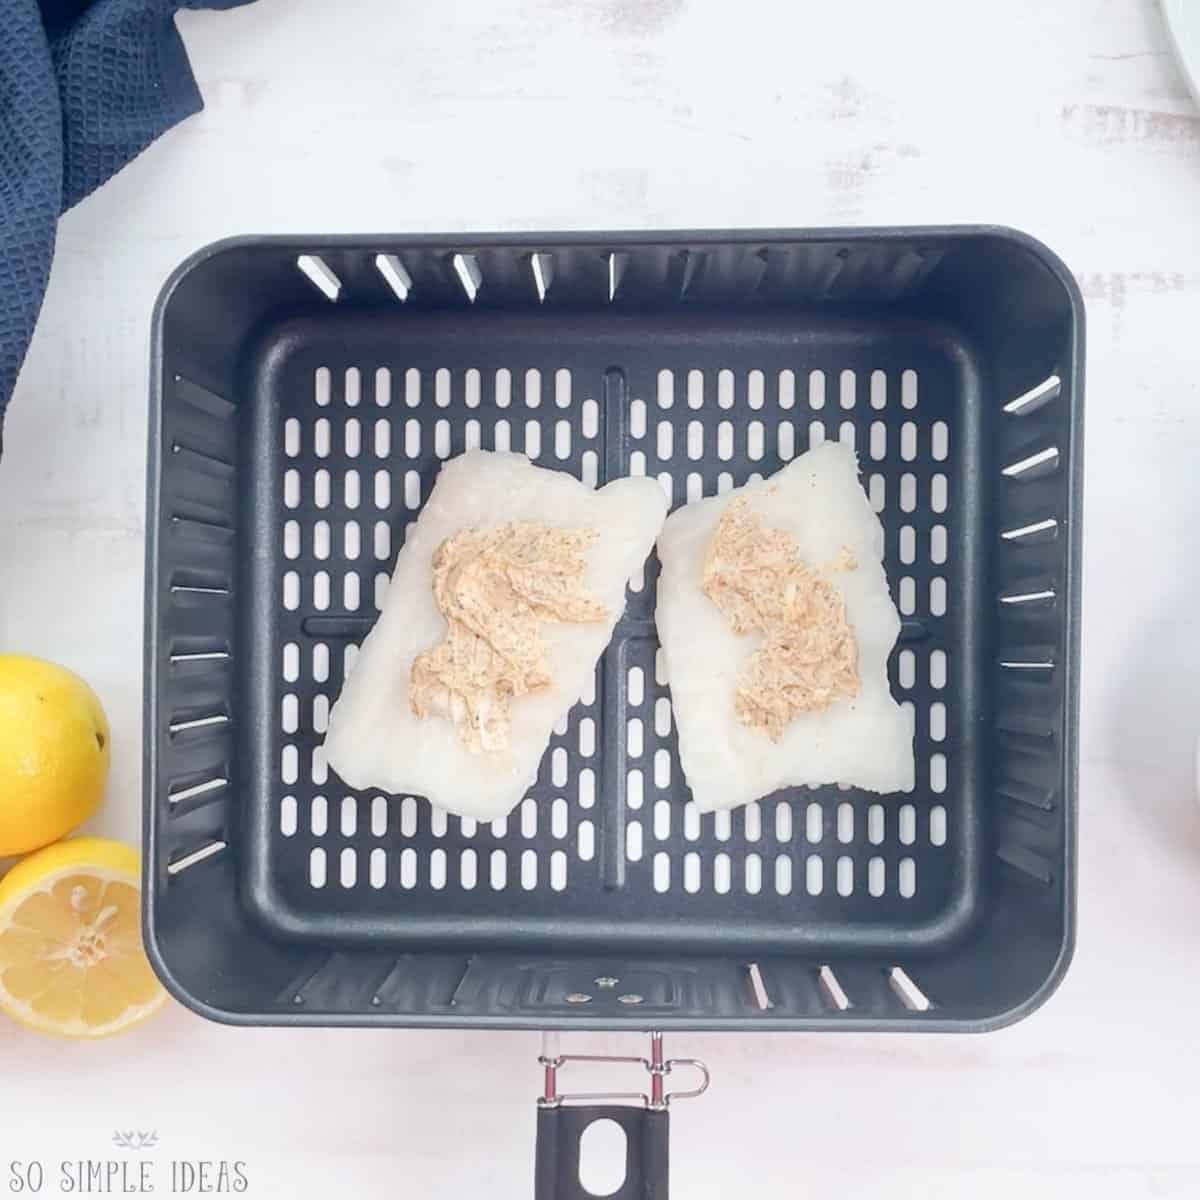 frozen fish fillets in air fryer basket with seasoned butter spread over.